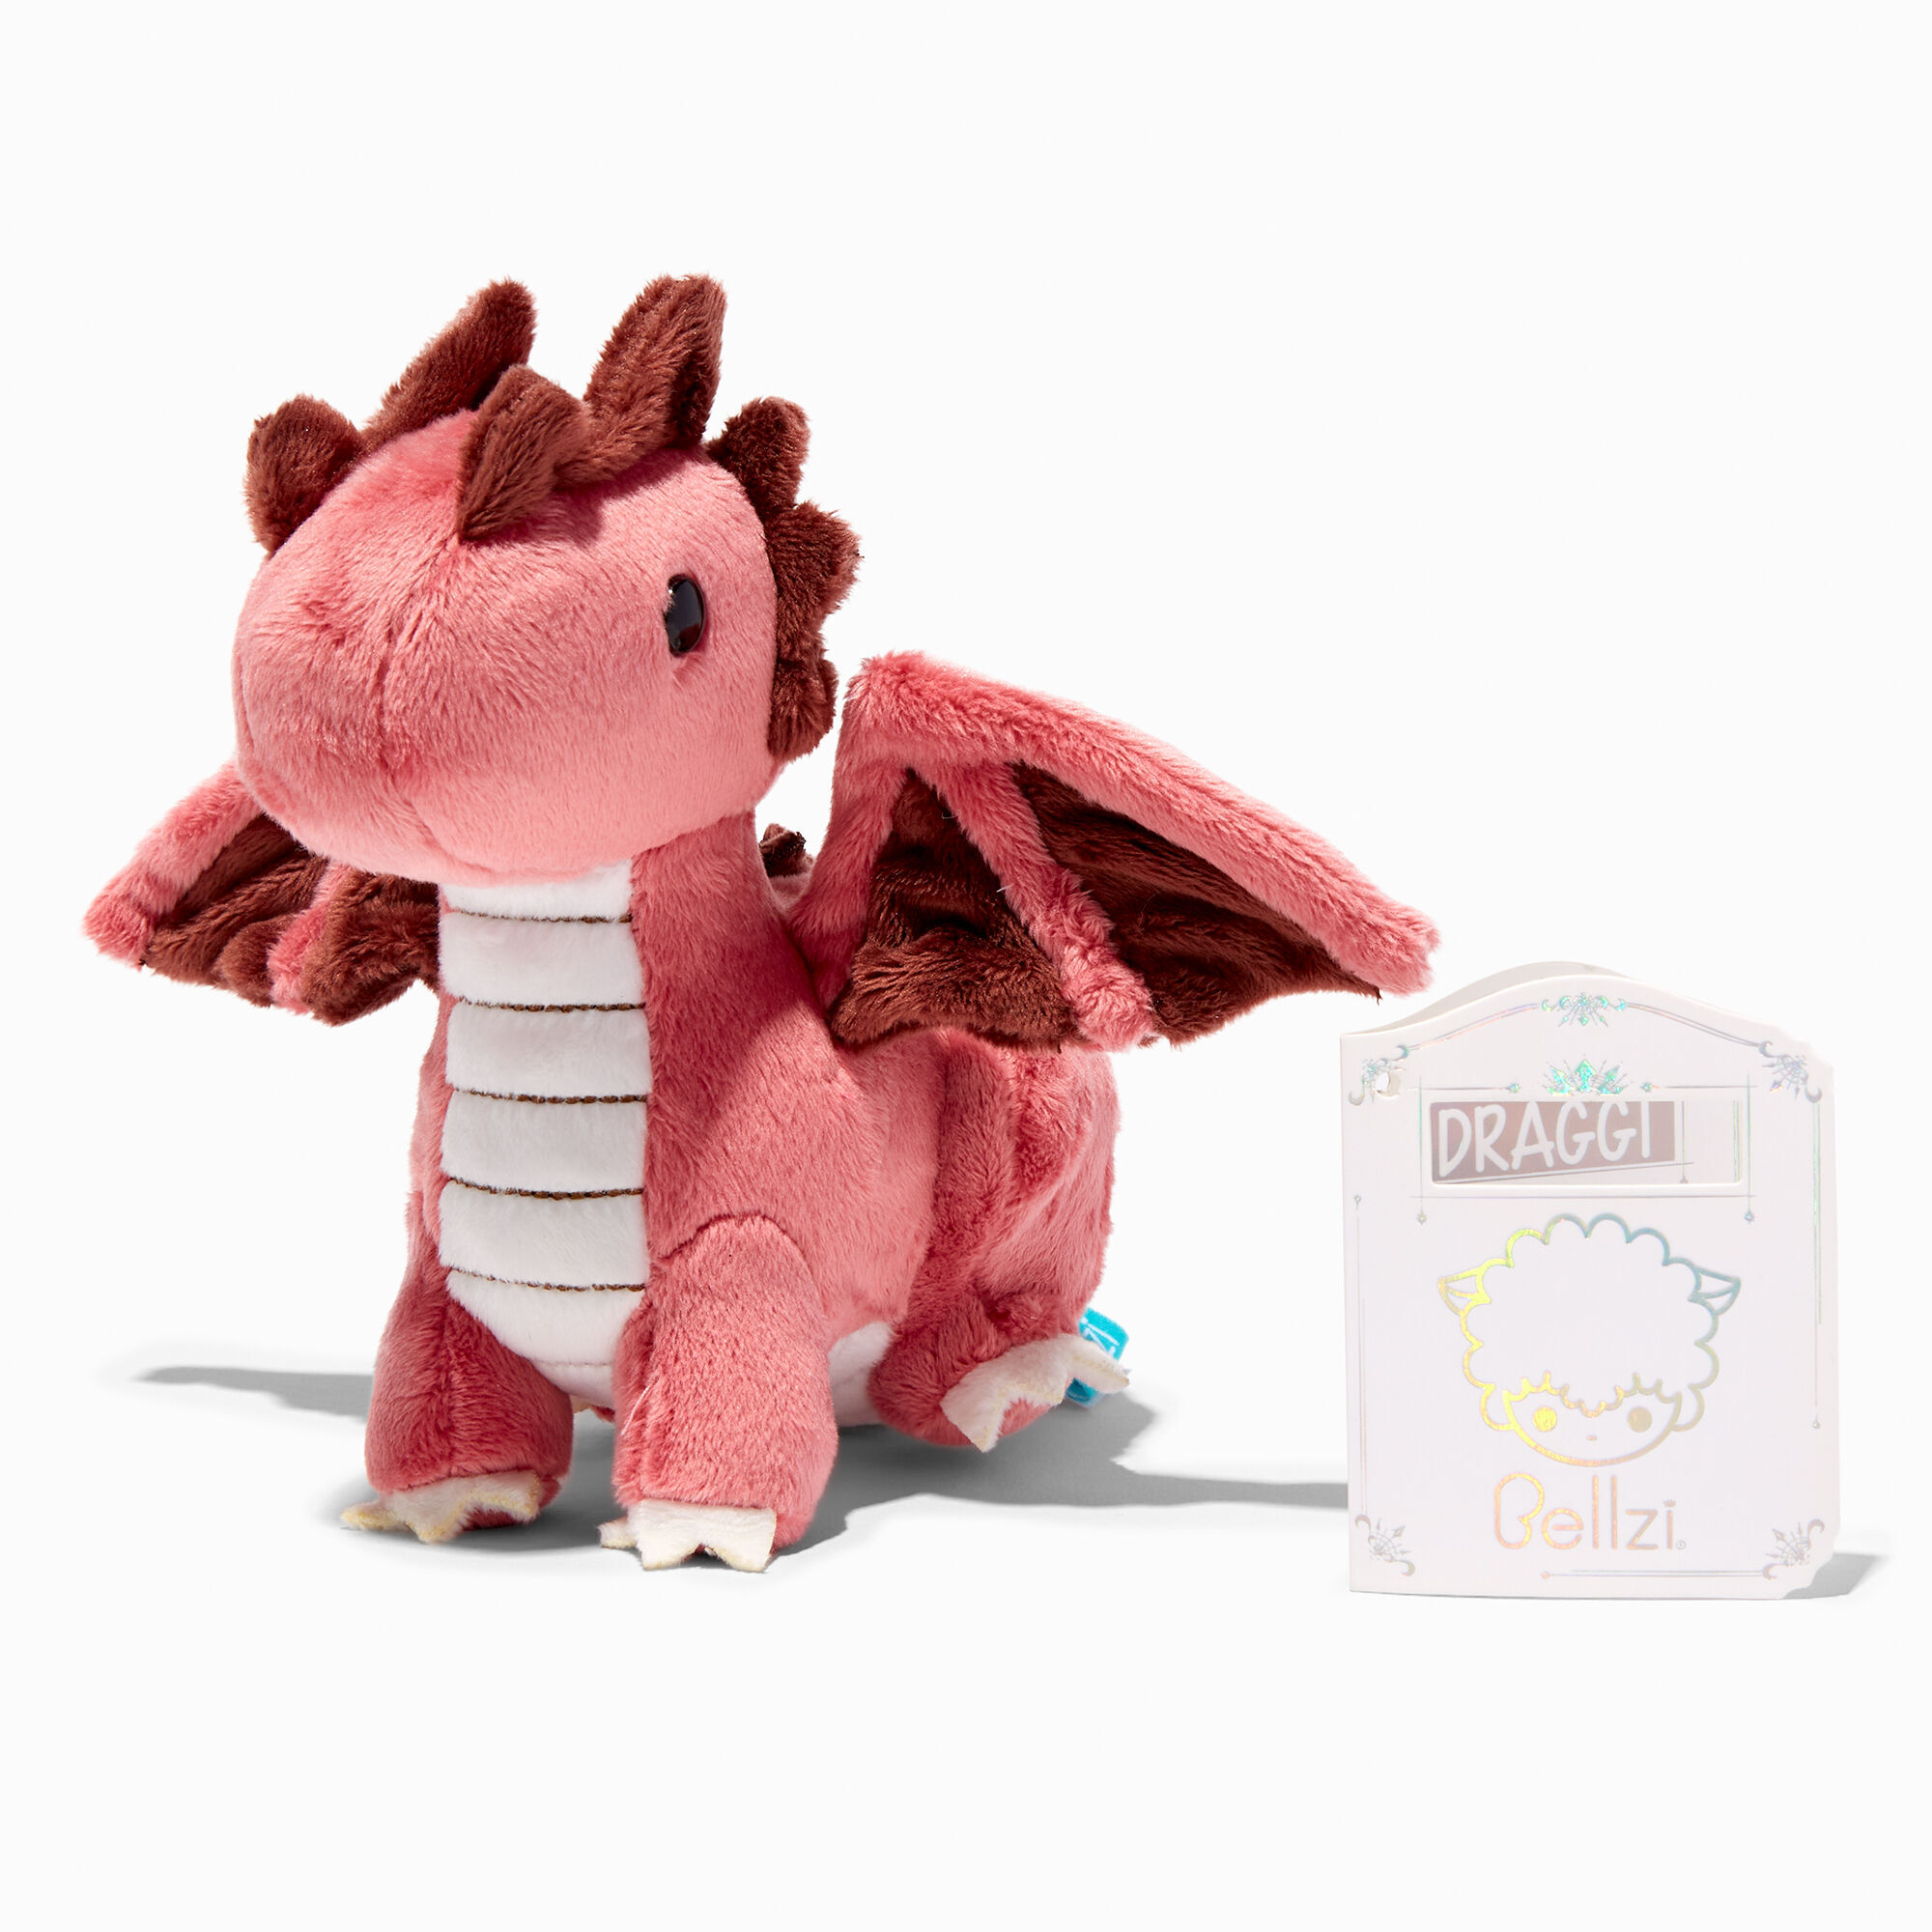 View Claires Bellzi 5 Draggi The Dragon Plush Toy information